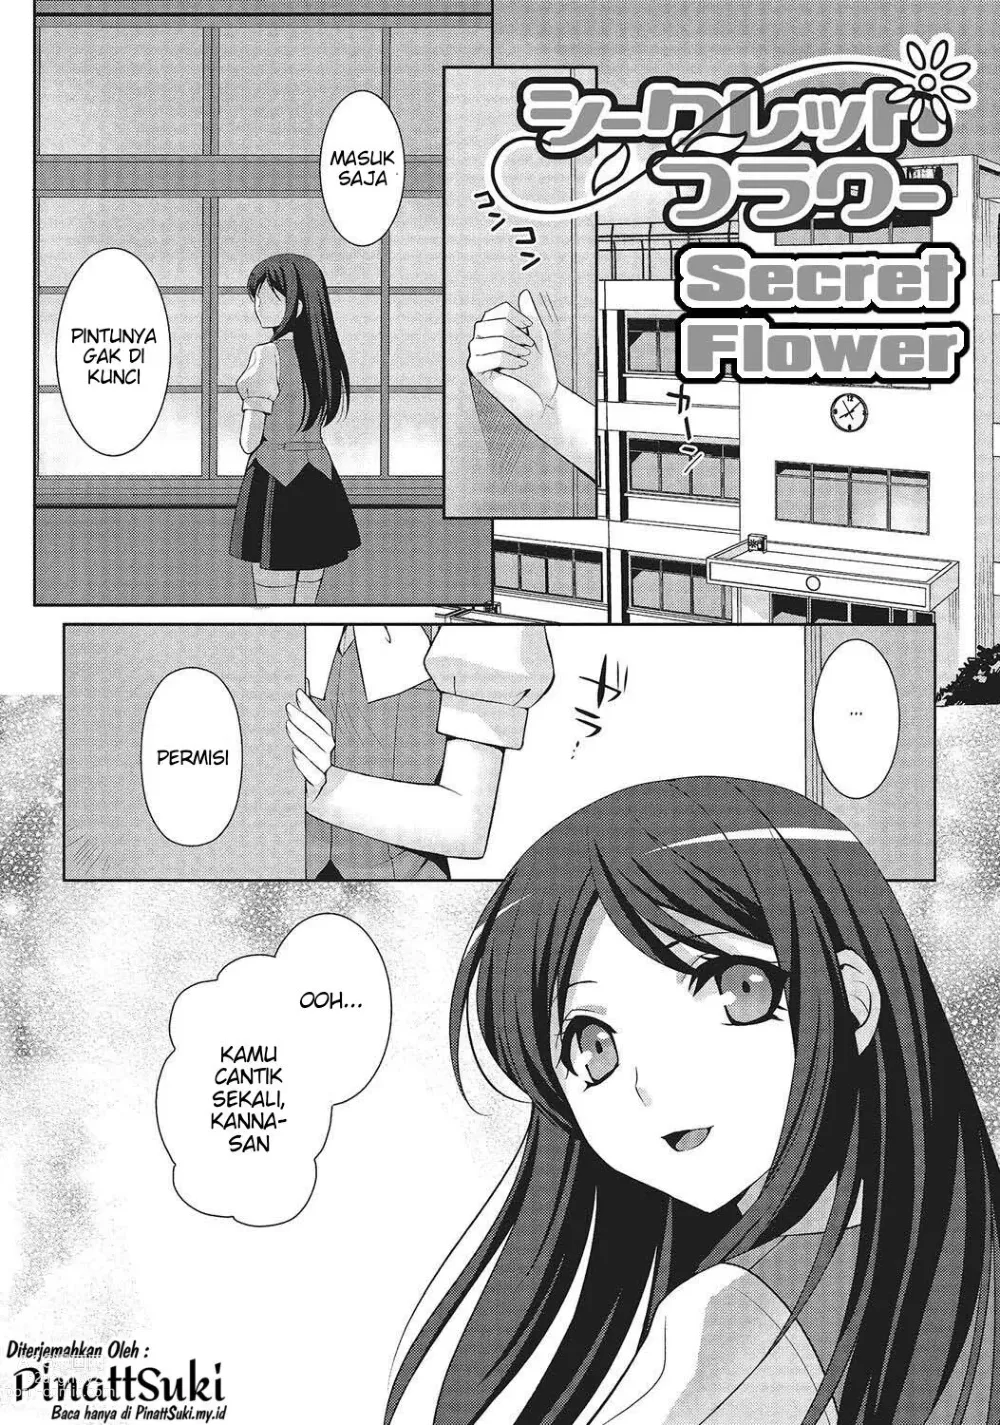 Page 1 of manga Secret Flower